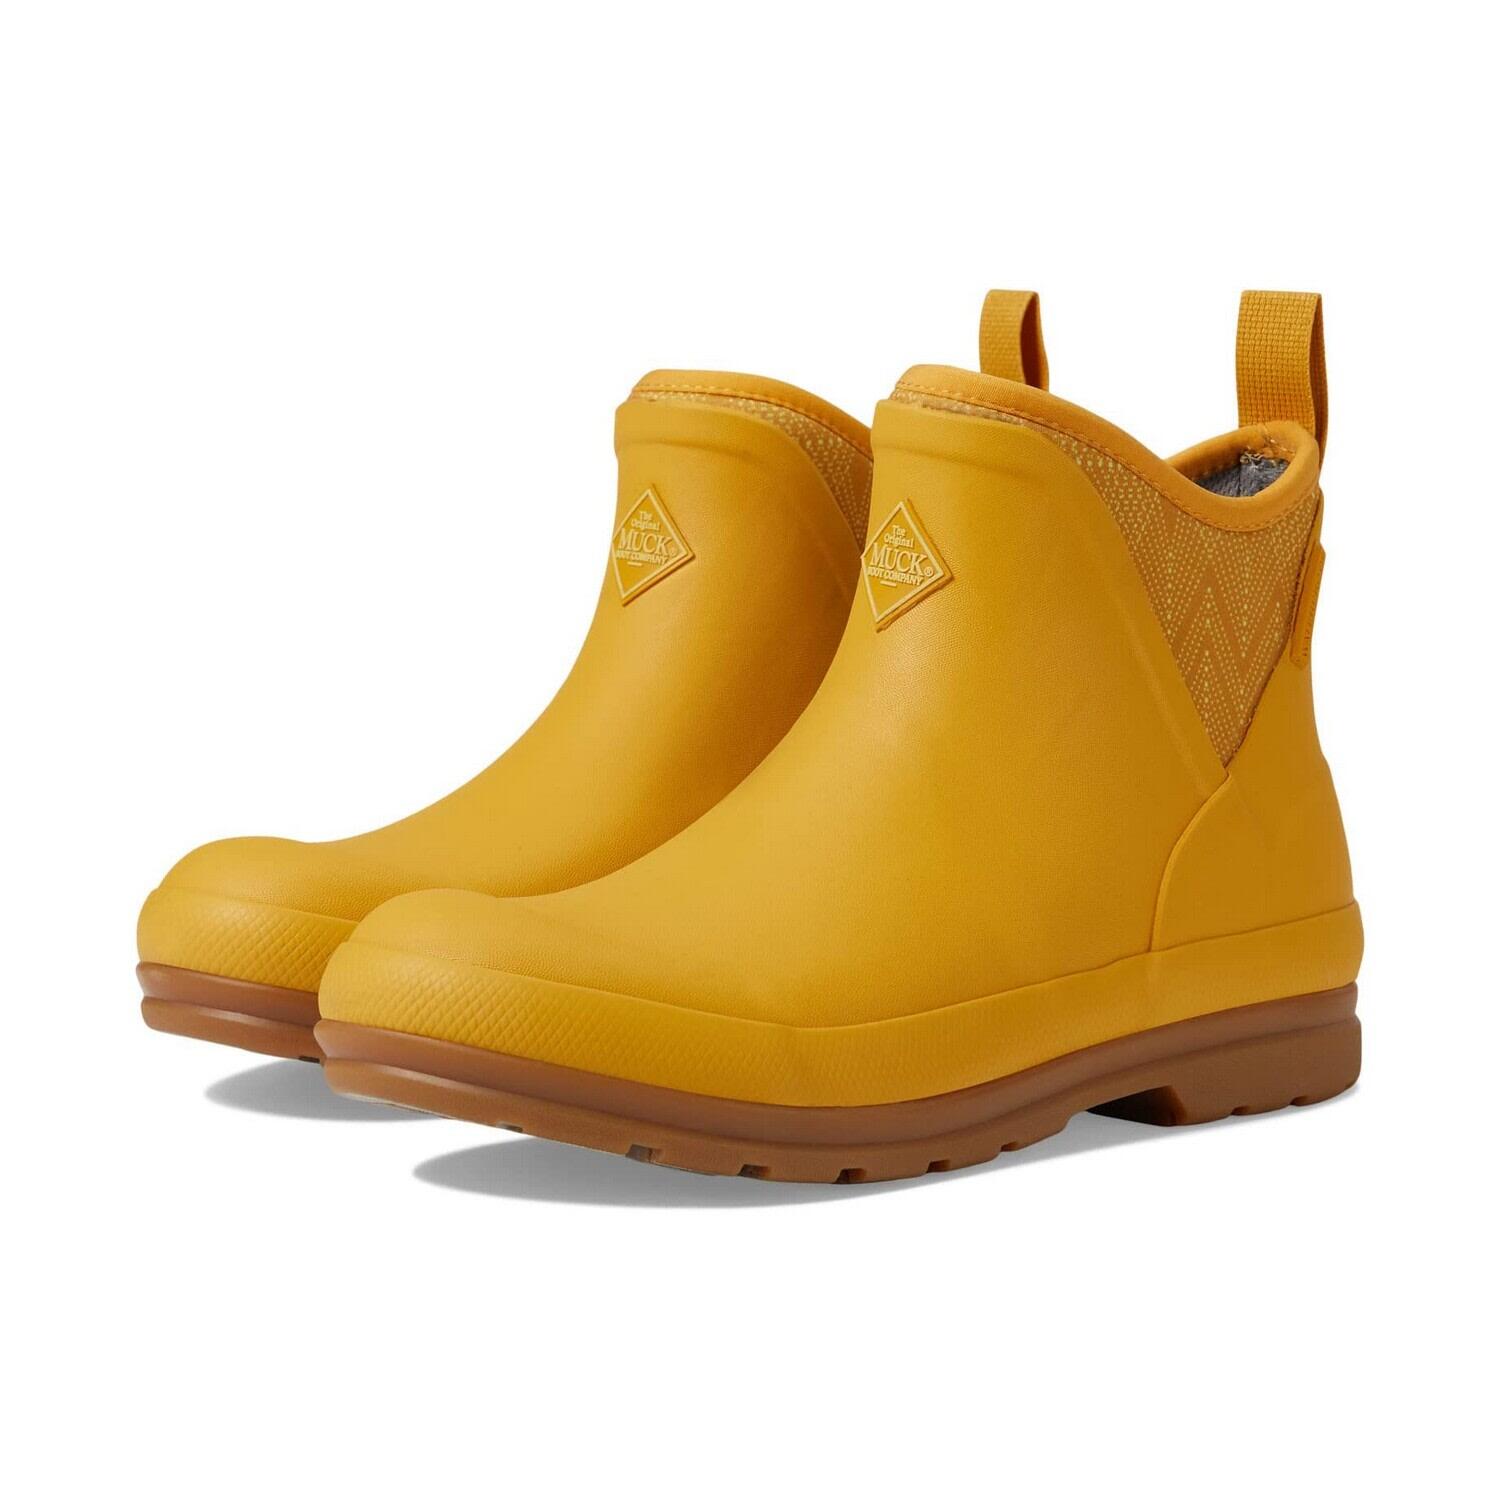 MUCK BOOTS Womens/Ladies Originals Wellington Boots (Yellow)